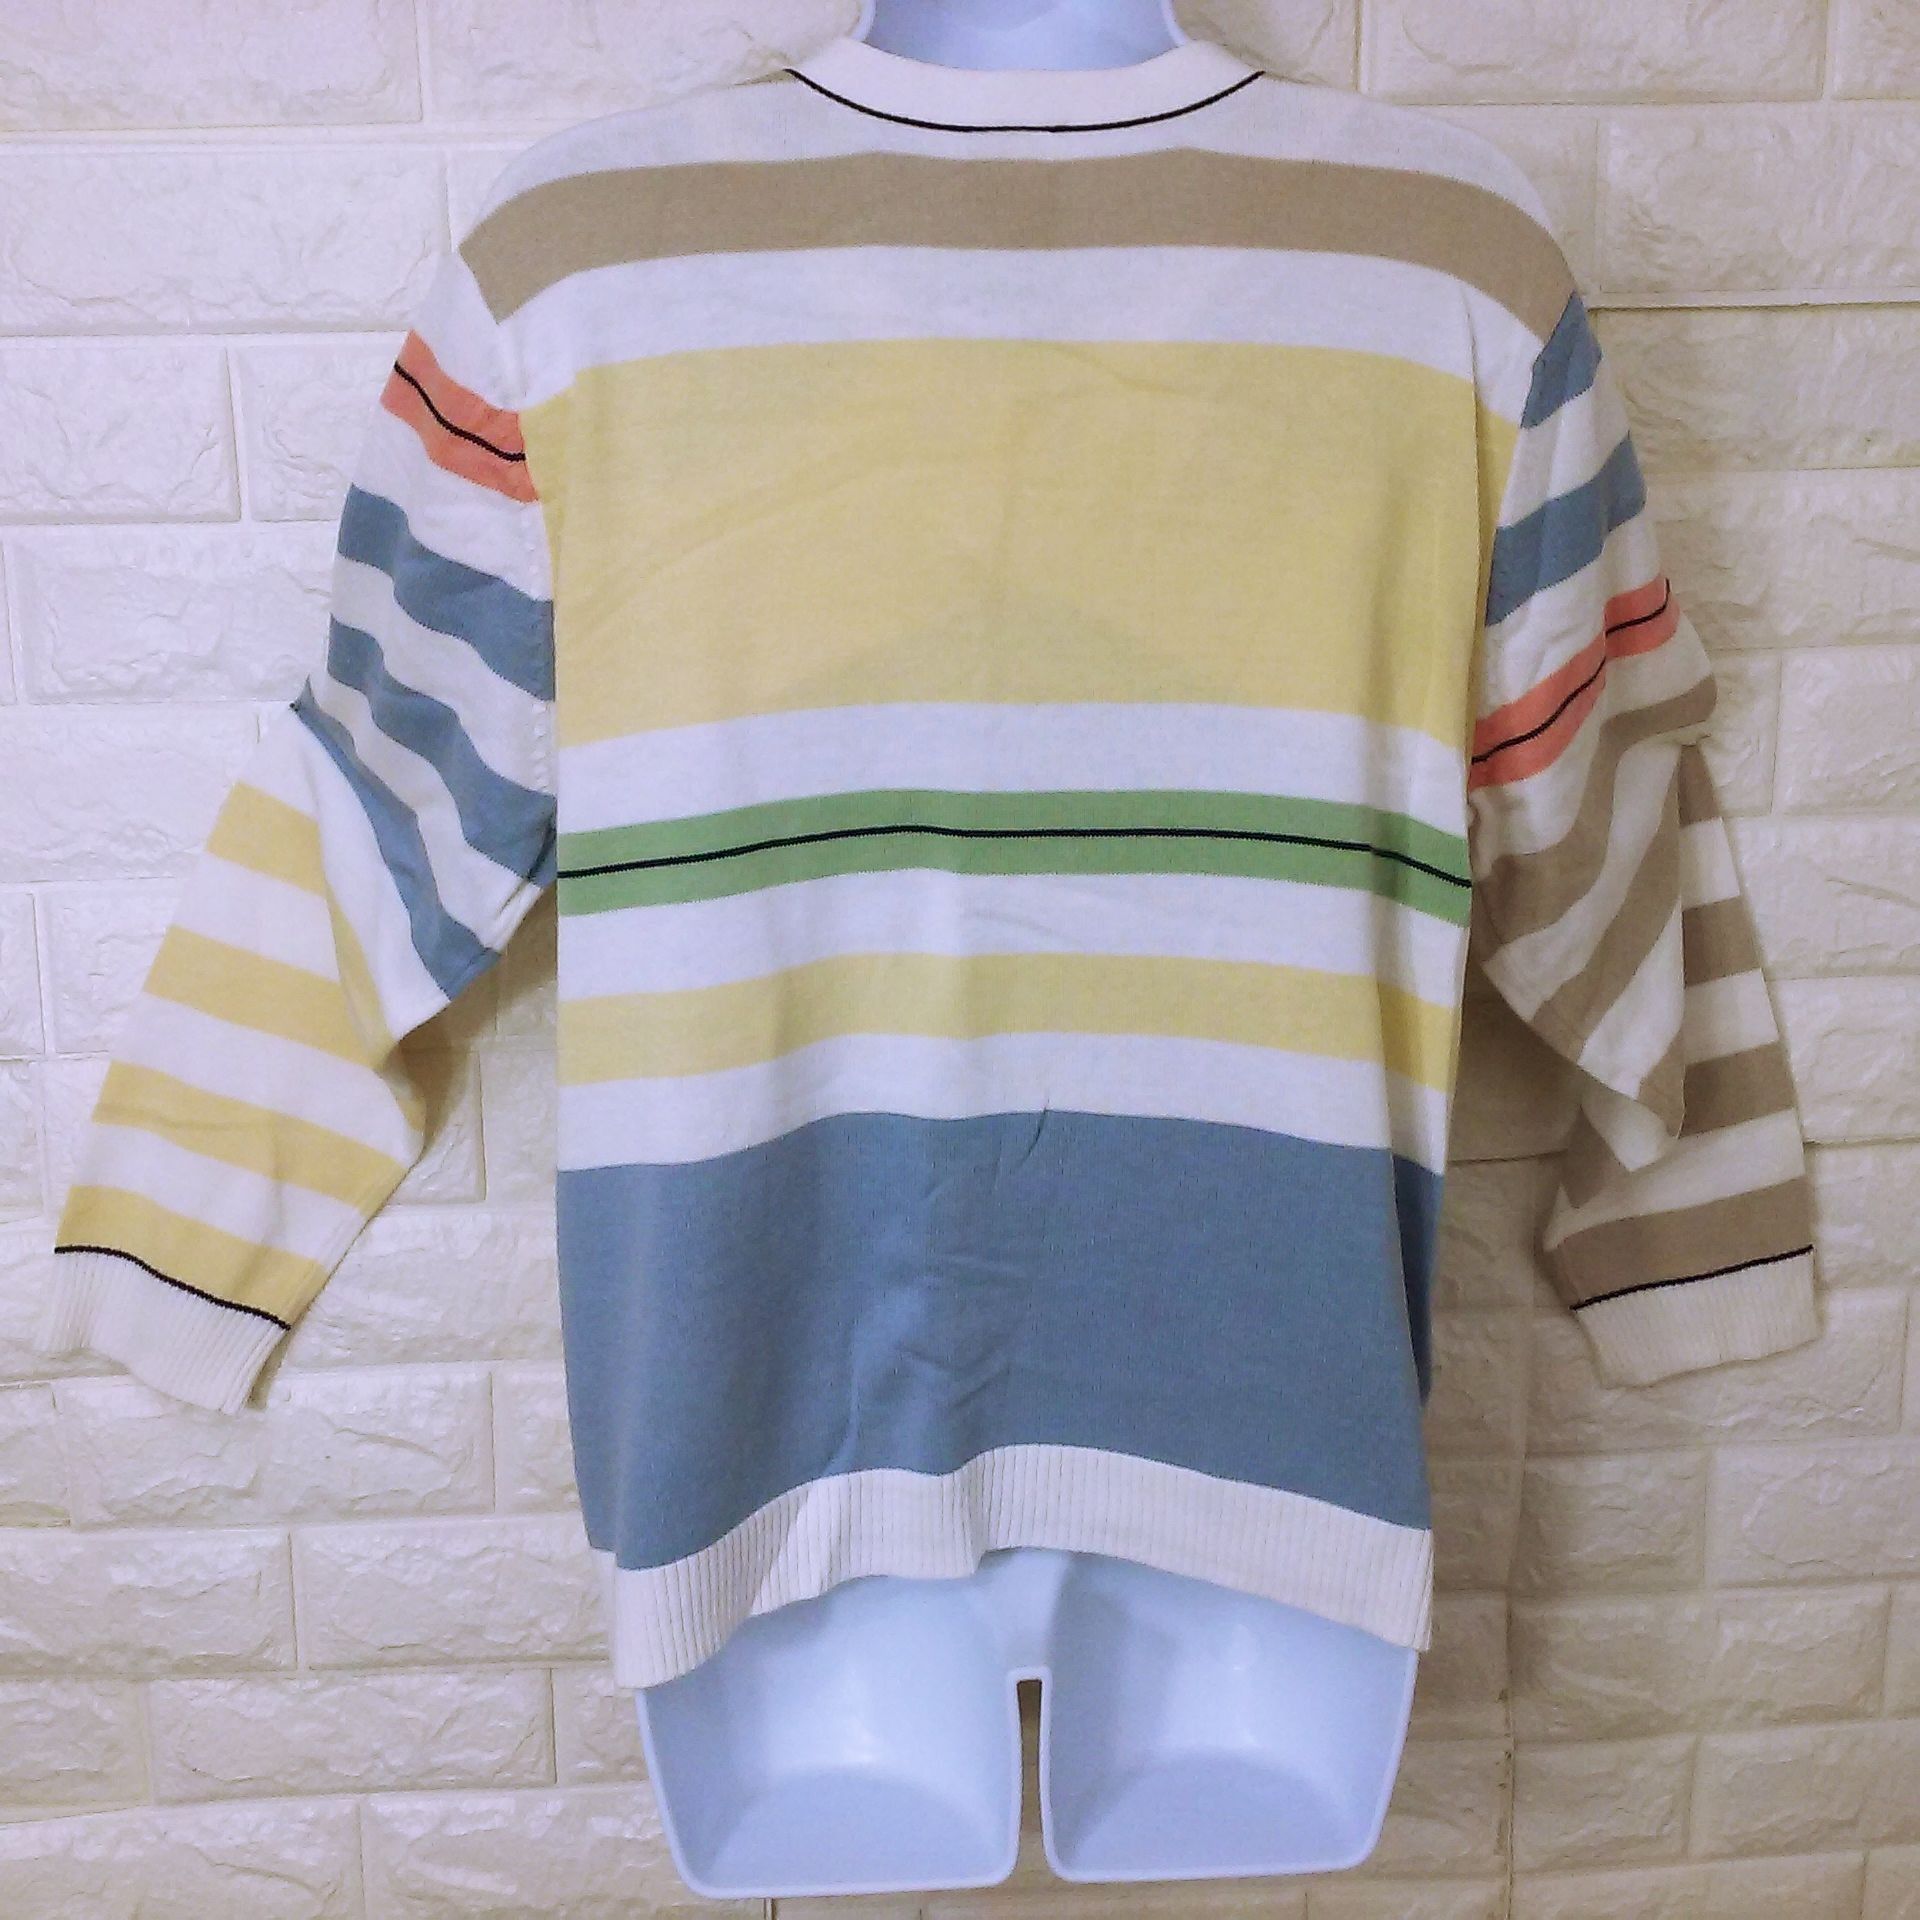 Vintage 90s Koret Knit Cardigan Top Novelty Sweater Striped Classic Size L / US 10 / IT 46 - 9 Thumbnail